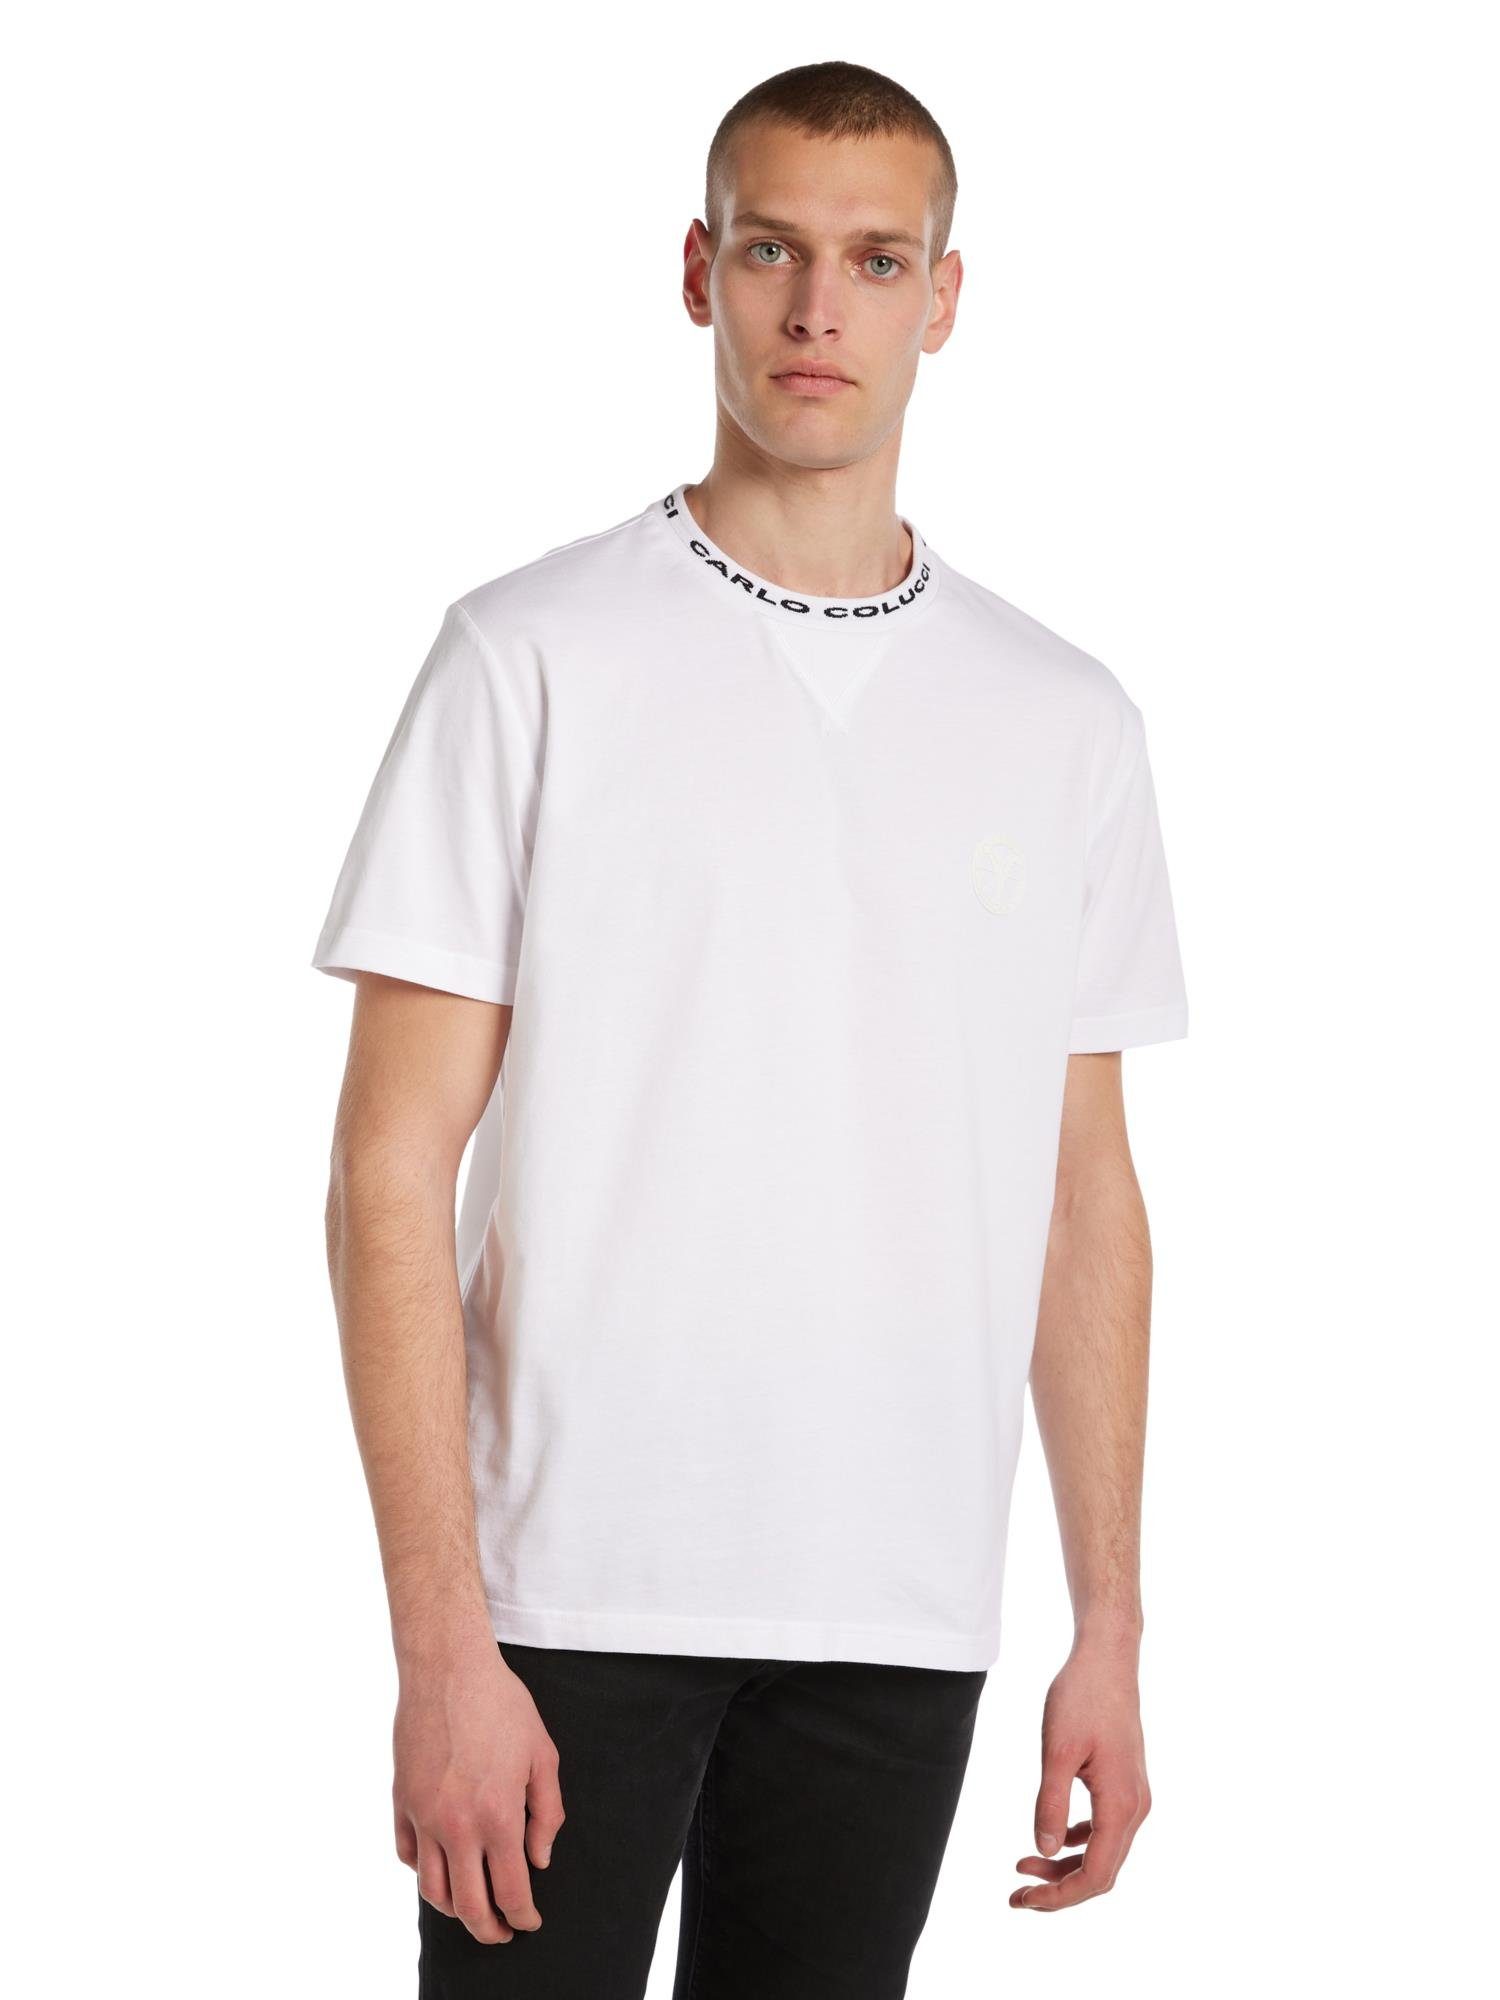 D'Addante T-Shirt CARLO COLUCCI Weiß